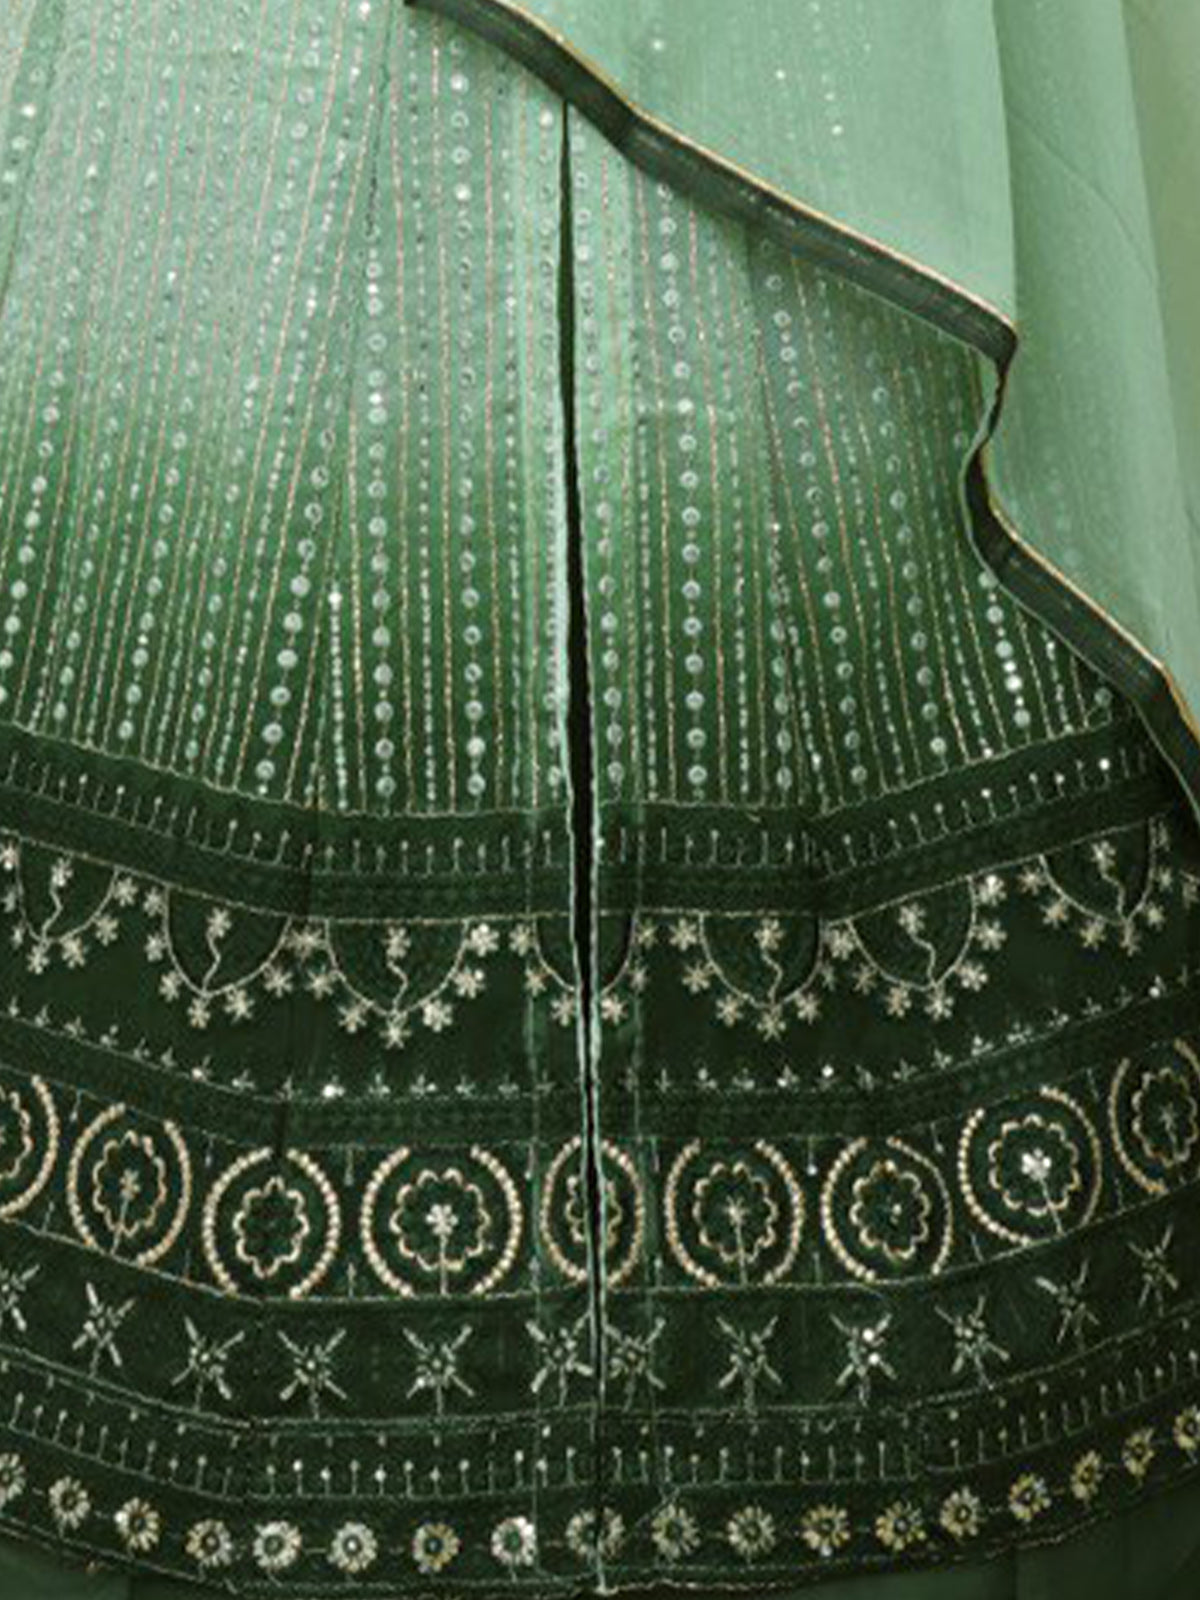 Odette - Green Embroidered Georgette Partywear Semi Stitched Anarkali Salwar Suit